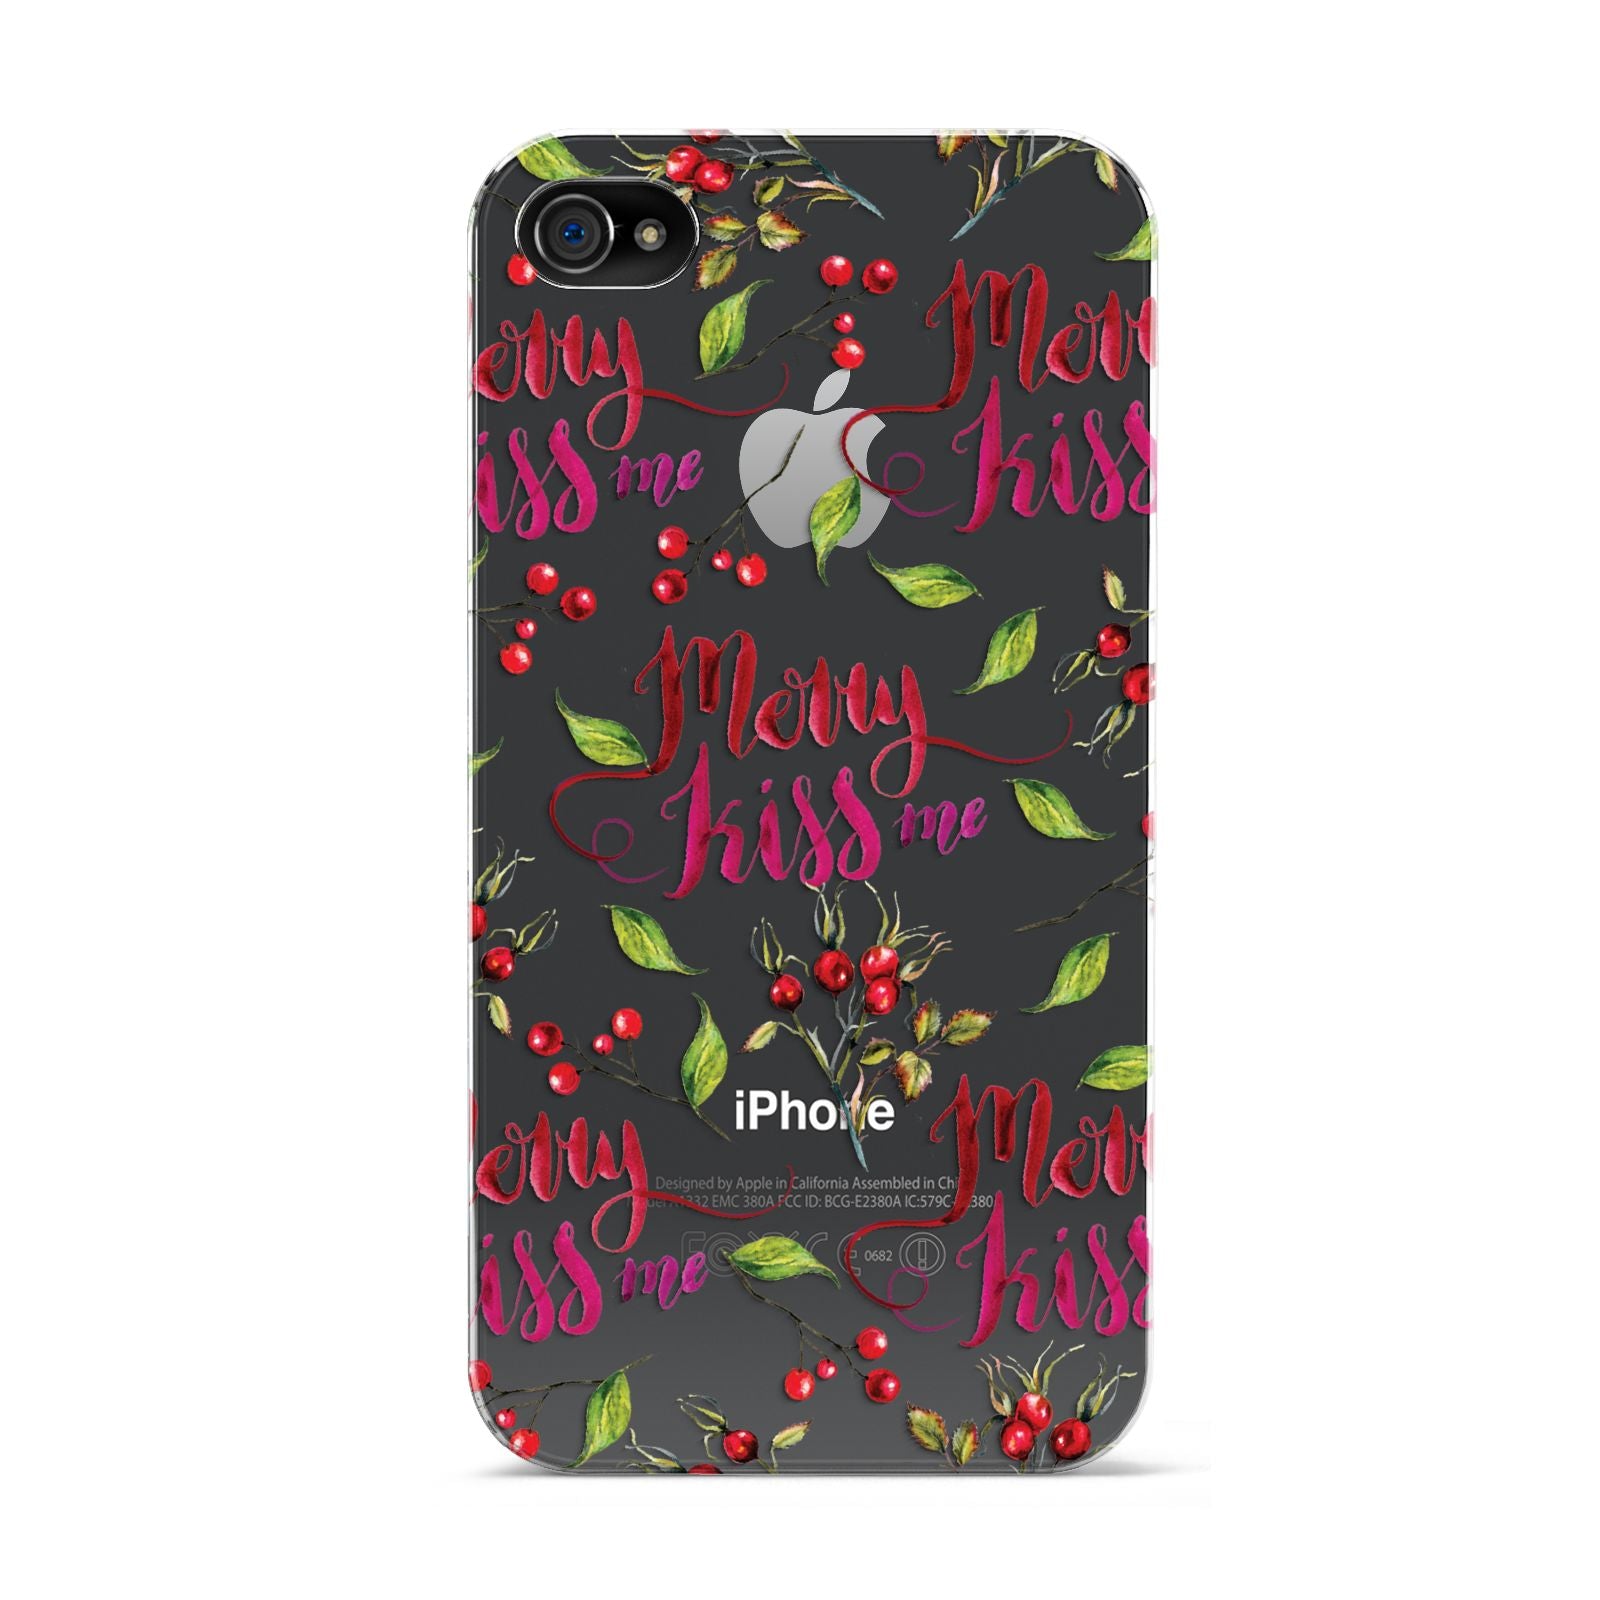 Merry kiss me Apple iPhone 4s Case